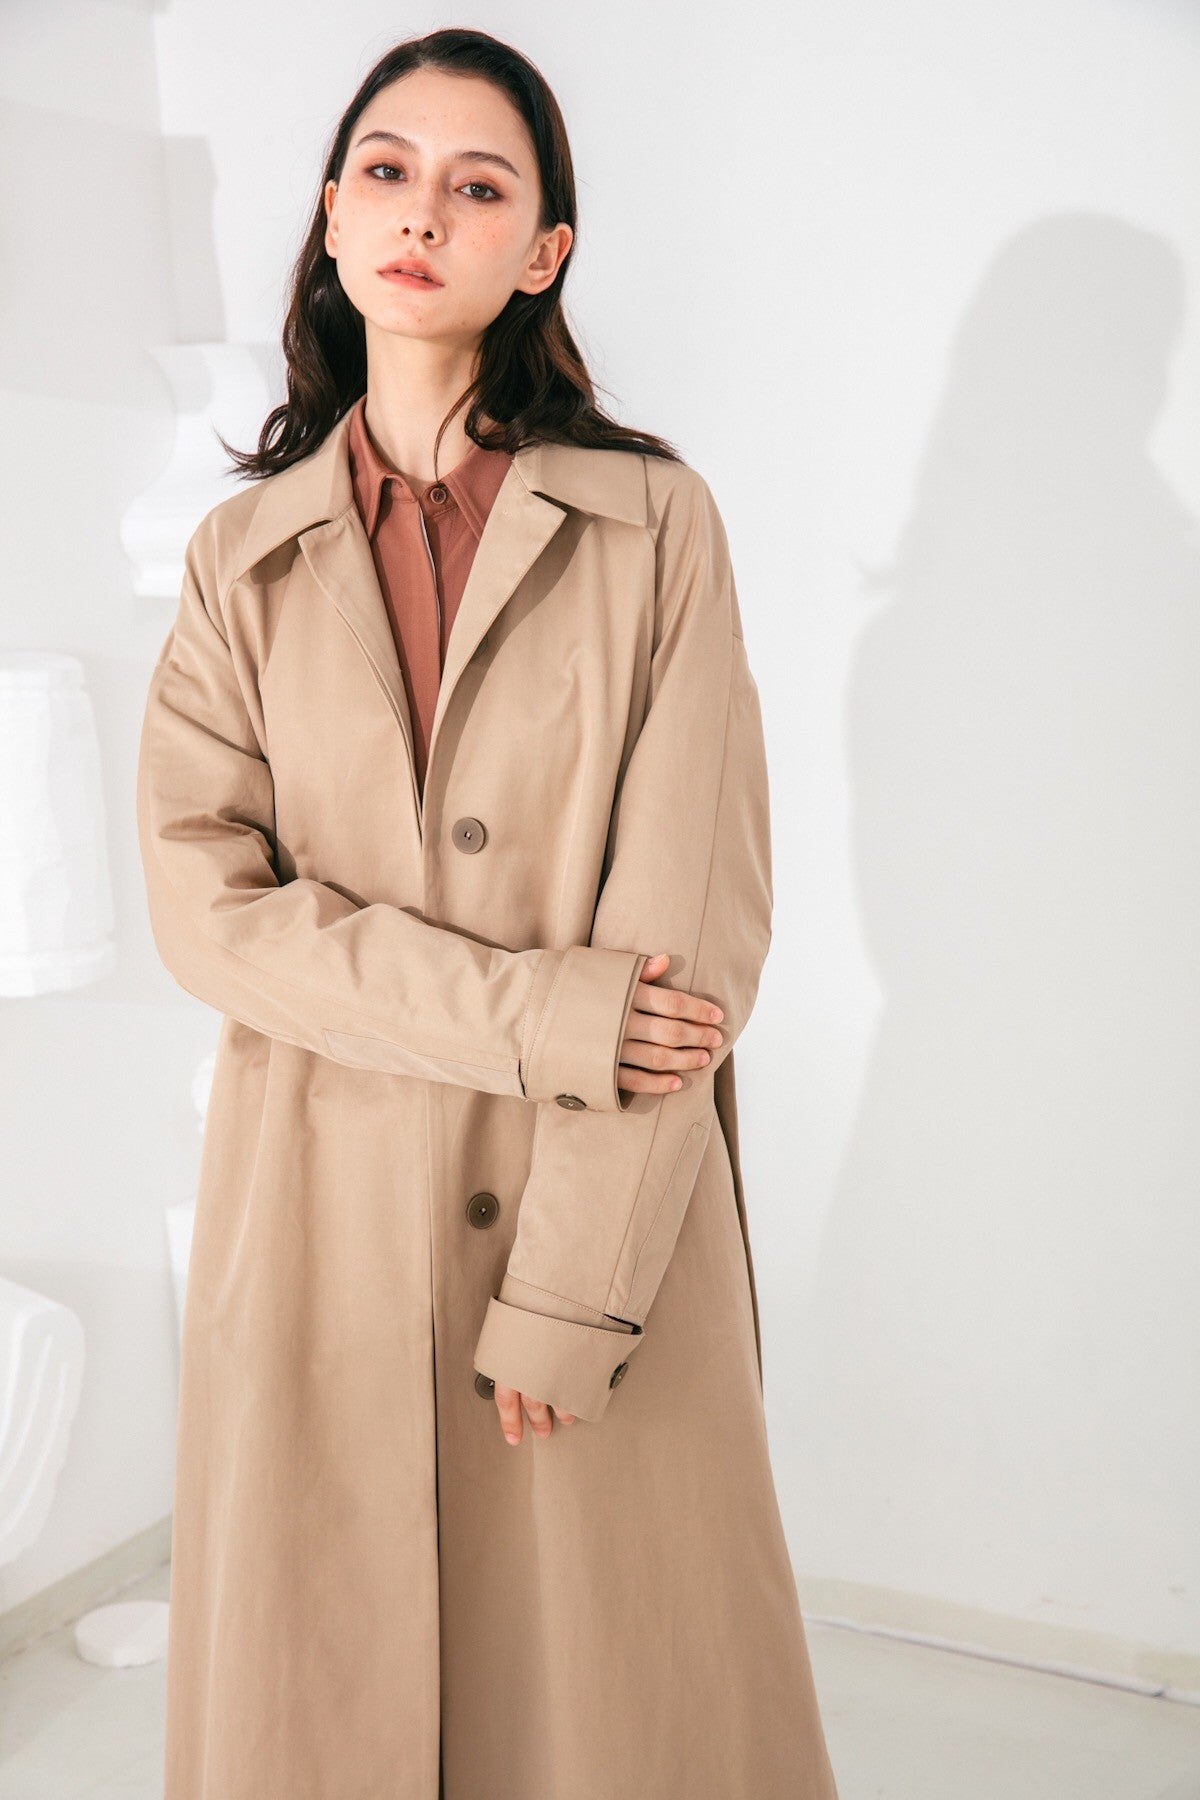 SKYE San Francisco SF shop ethical modern minimalist quality women clothing fashion Coraline Trench Coat beige 3